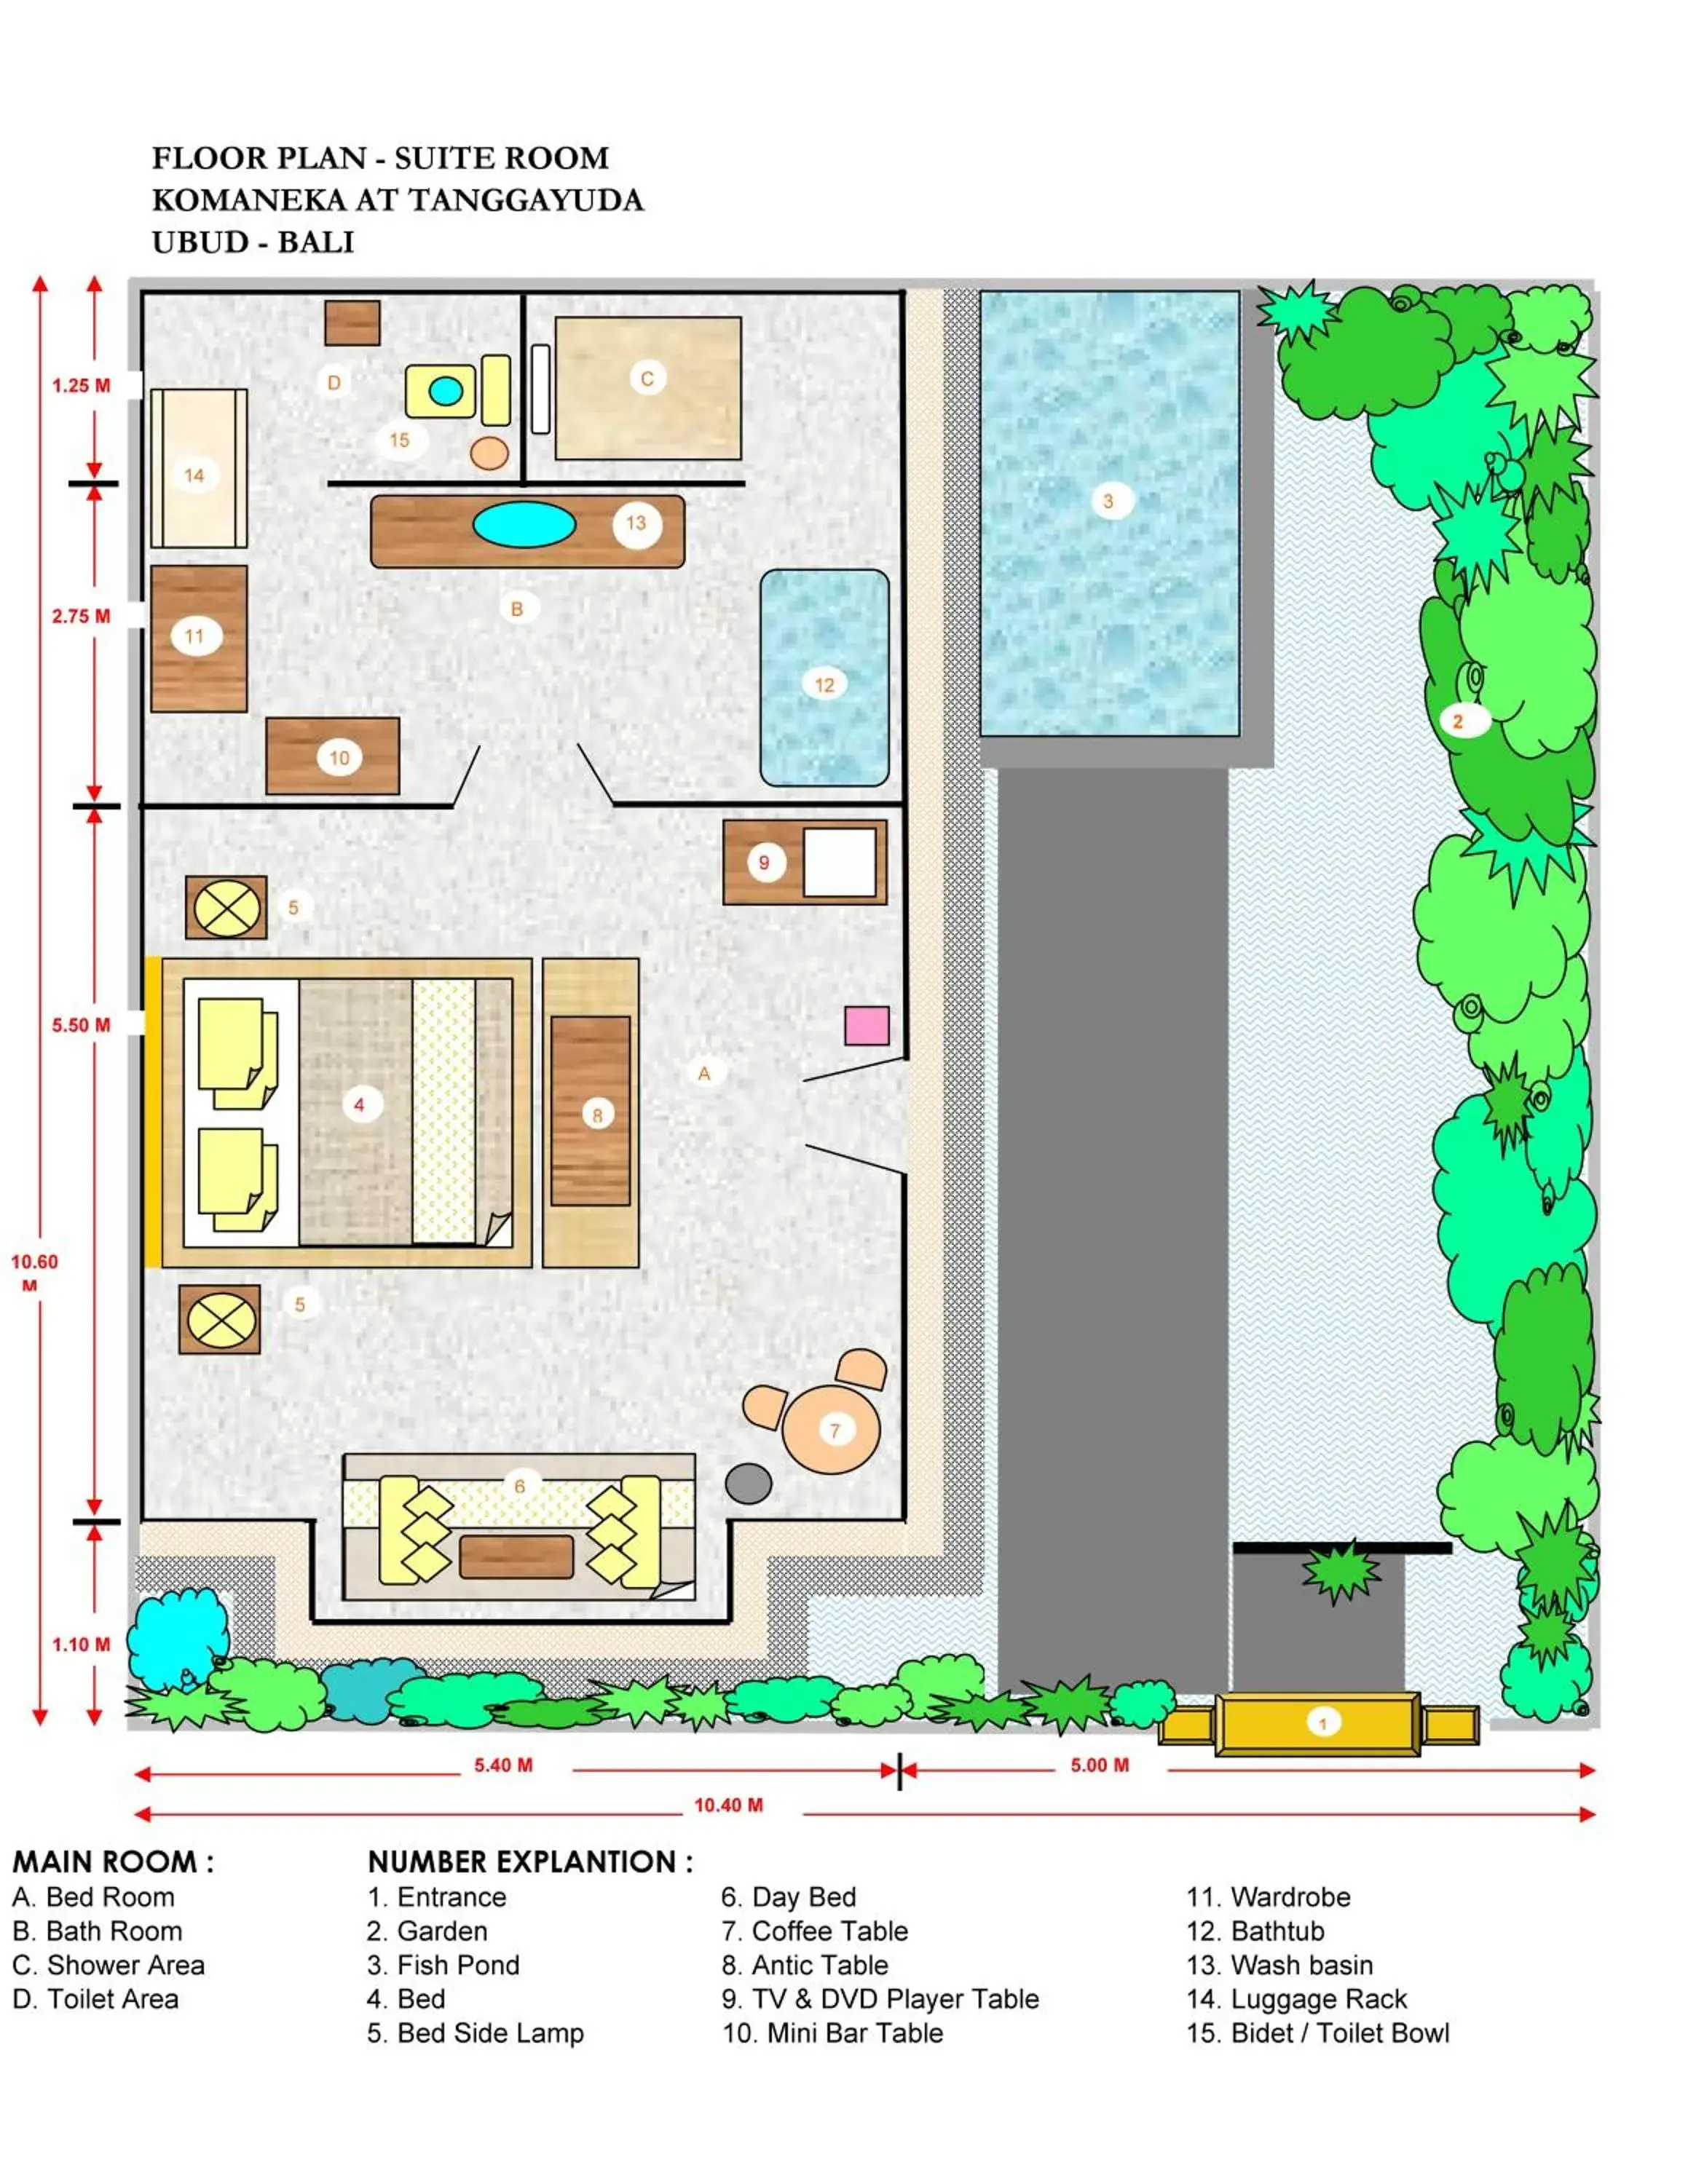 Garden, Floor Plan in Komaneka at Tanggayuda Ubud